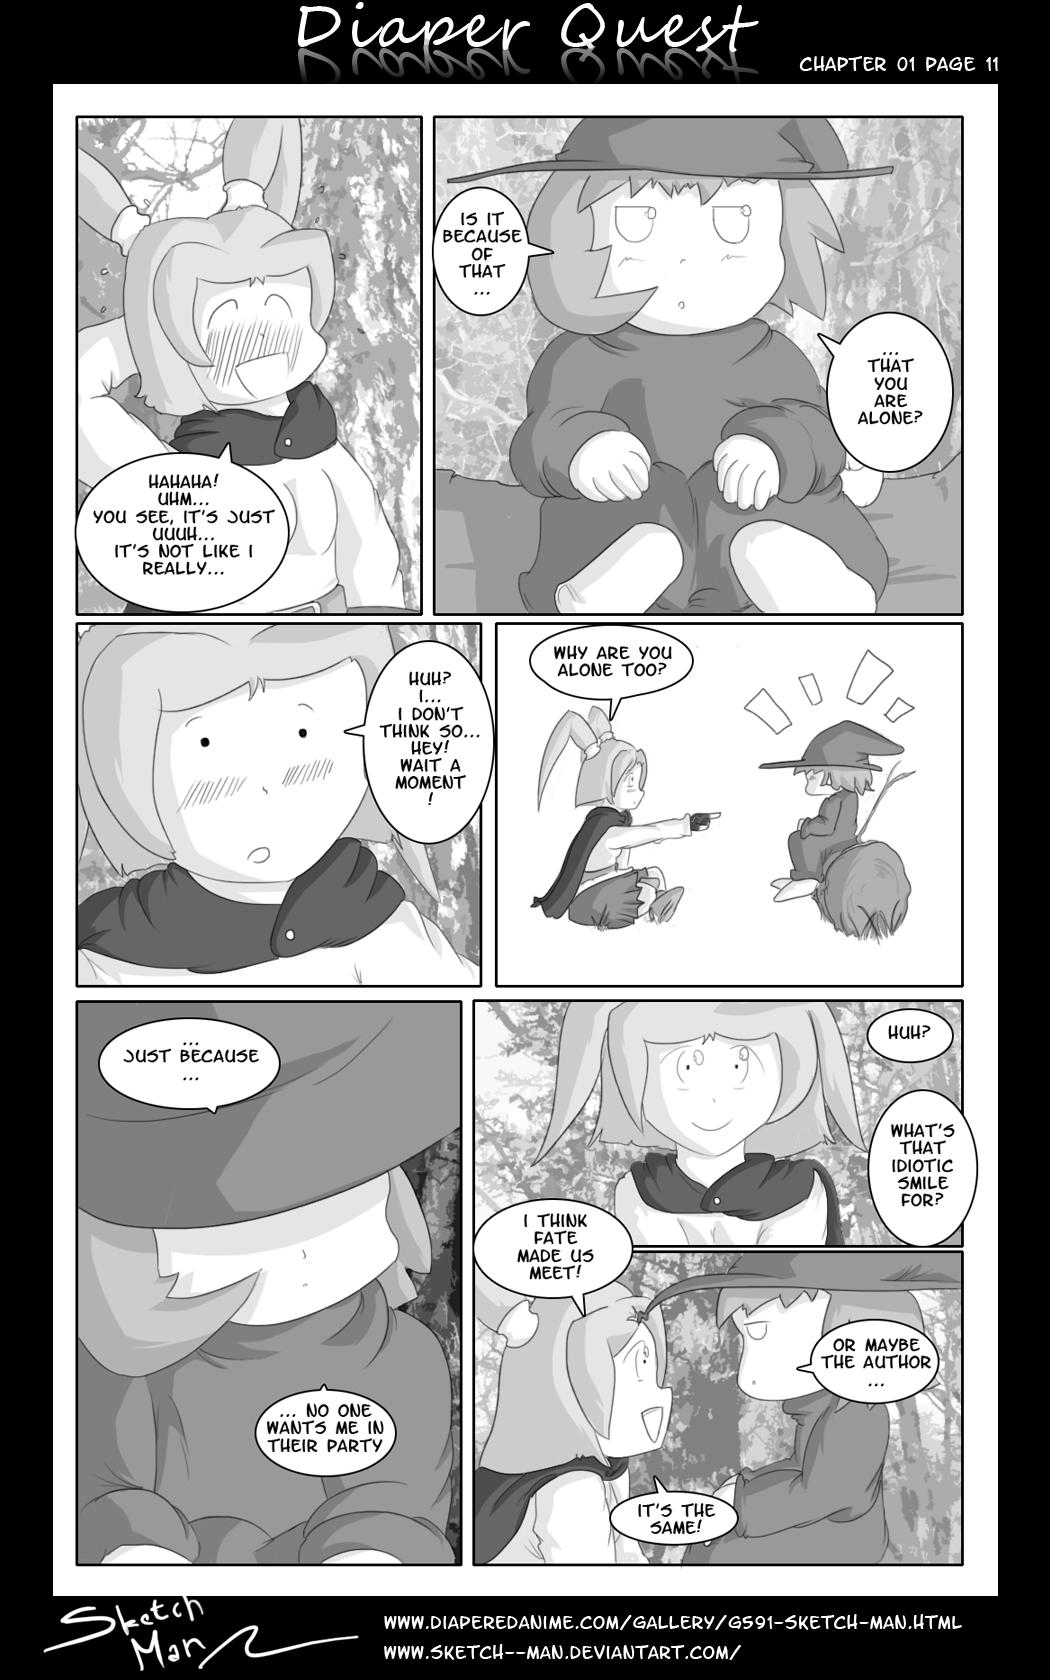 Brunettes Sketch Man's Diaper Quest Complete Sem Camisinha - Page 11